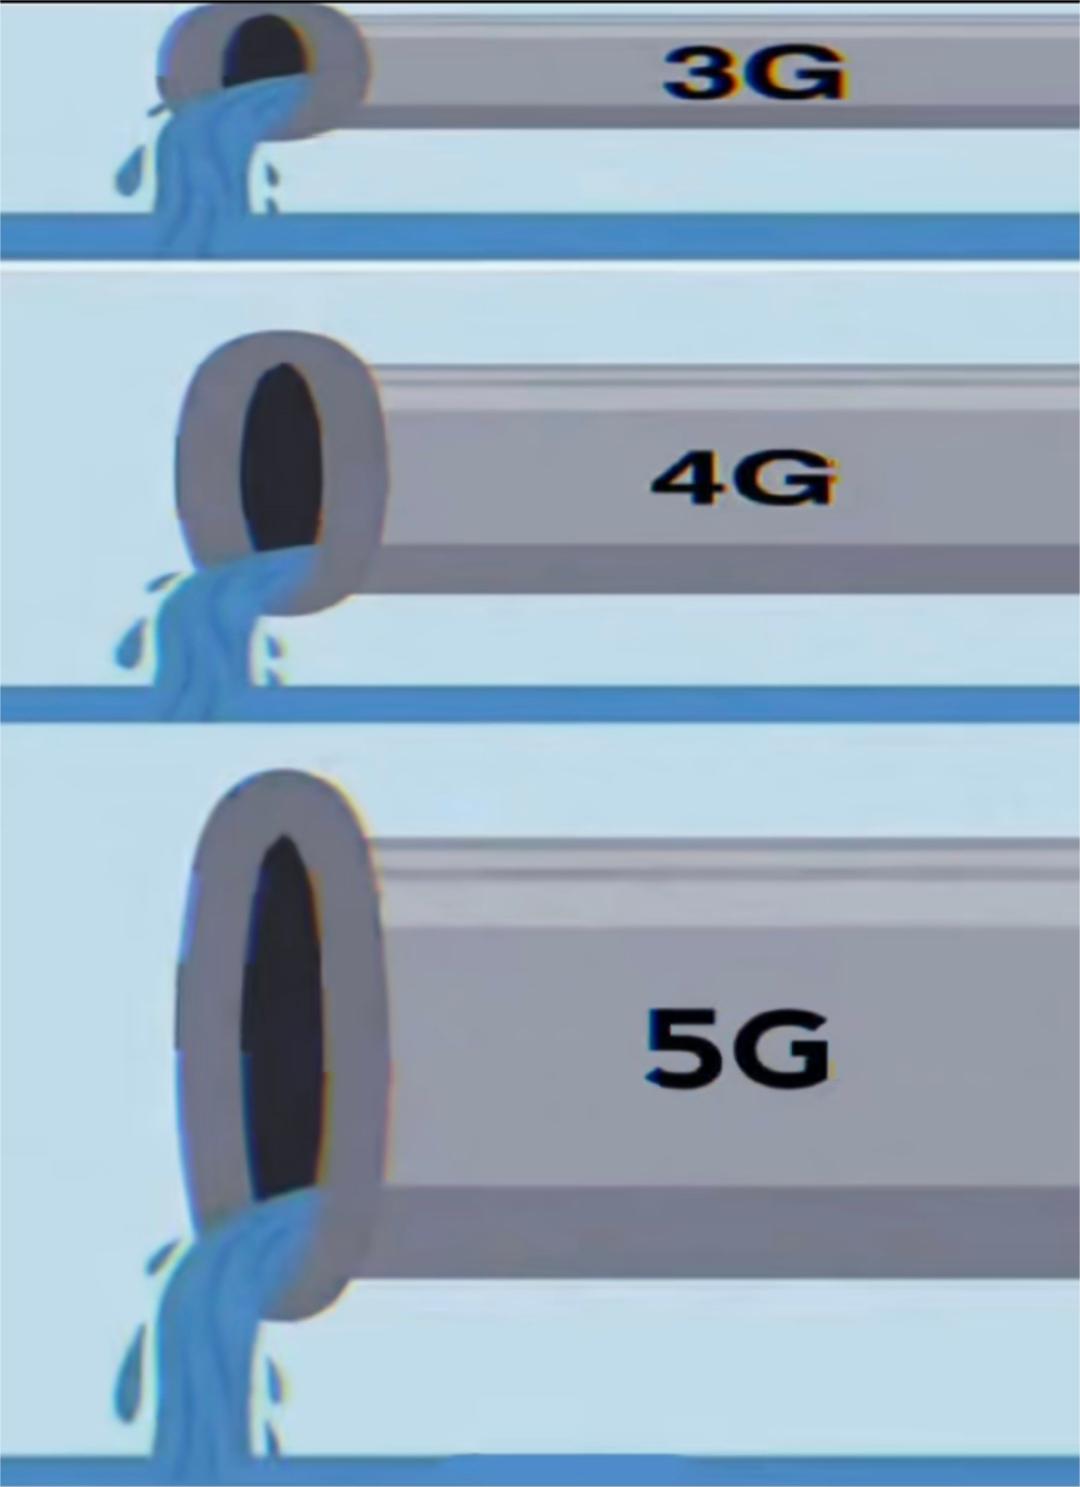 3G4G5G网络网速对比搞笑图（水管流水）